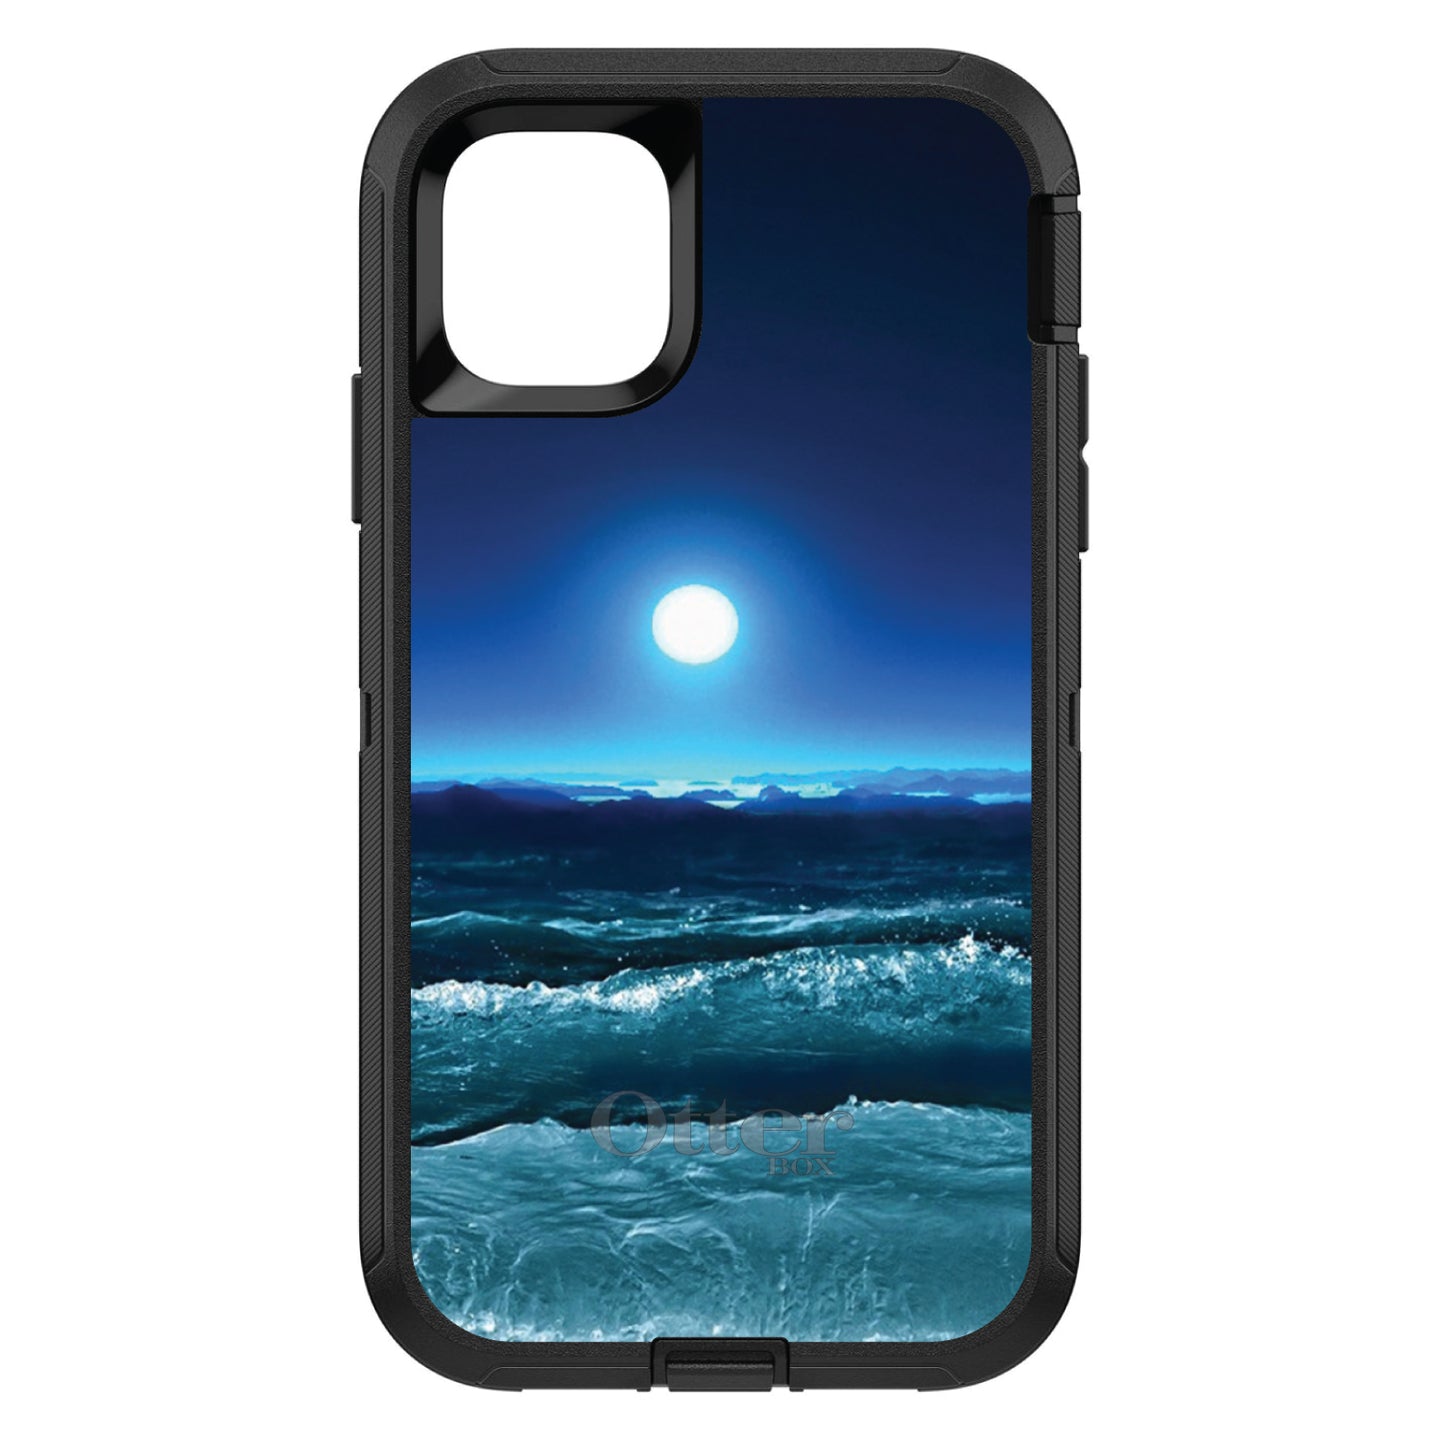 DistinctInk™ OtterBox Defender Series Case for Apple iPhone / Samsung Galaxy / Google Pixel - Moonlit Ocean Waves